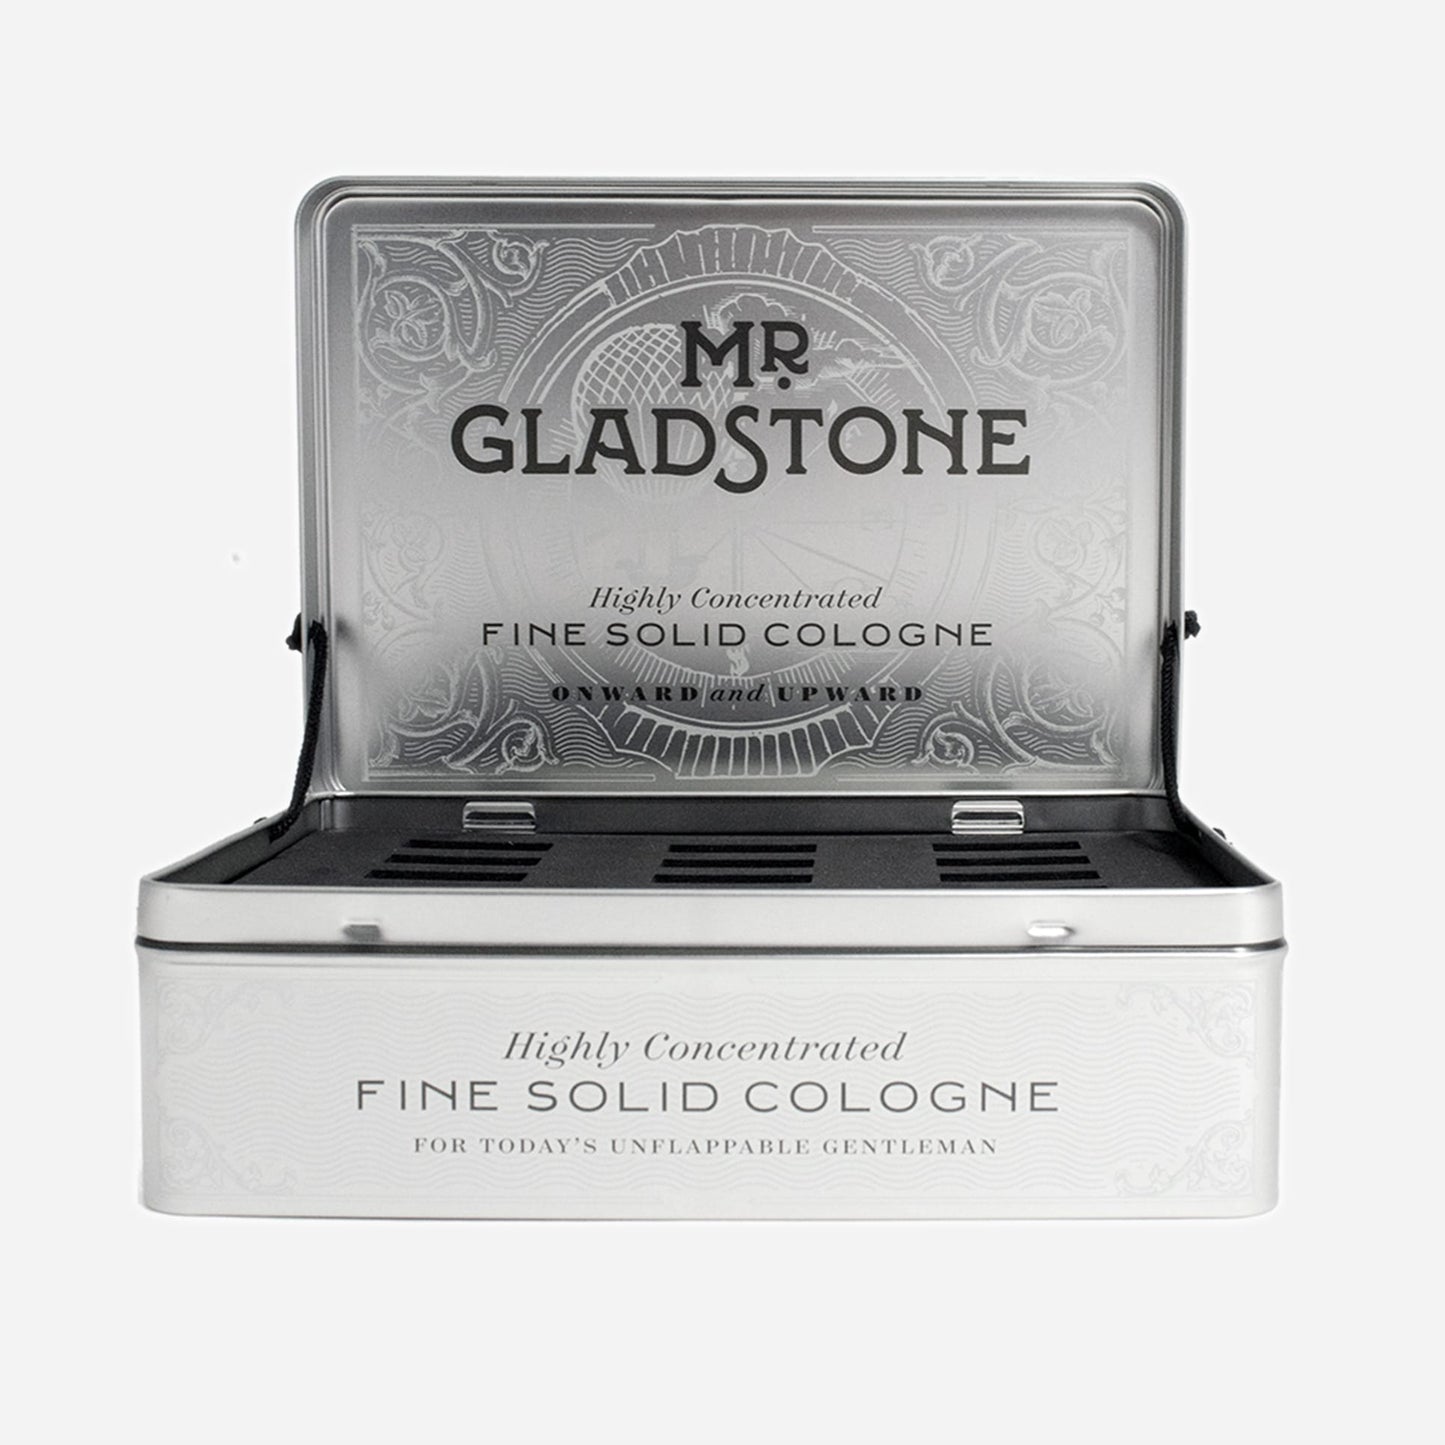 Mr. Gladstone Empty Retail Display Tin - Display Only